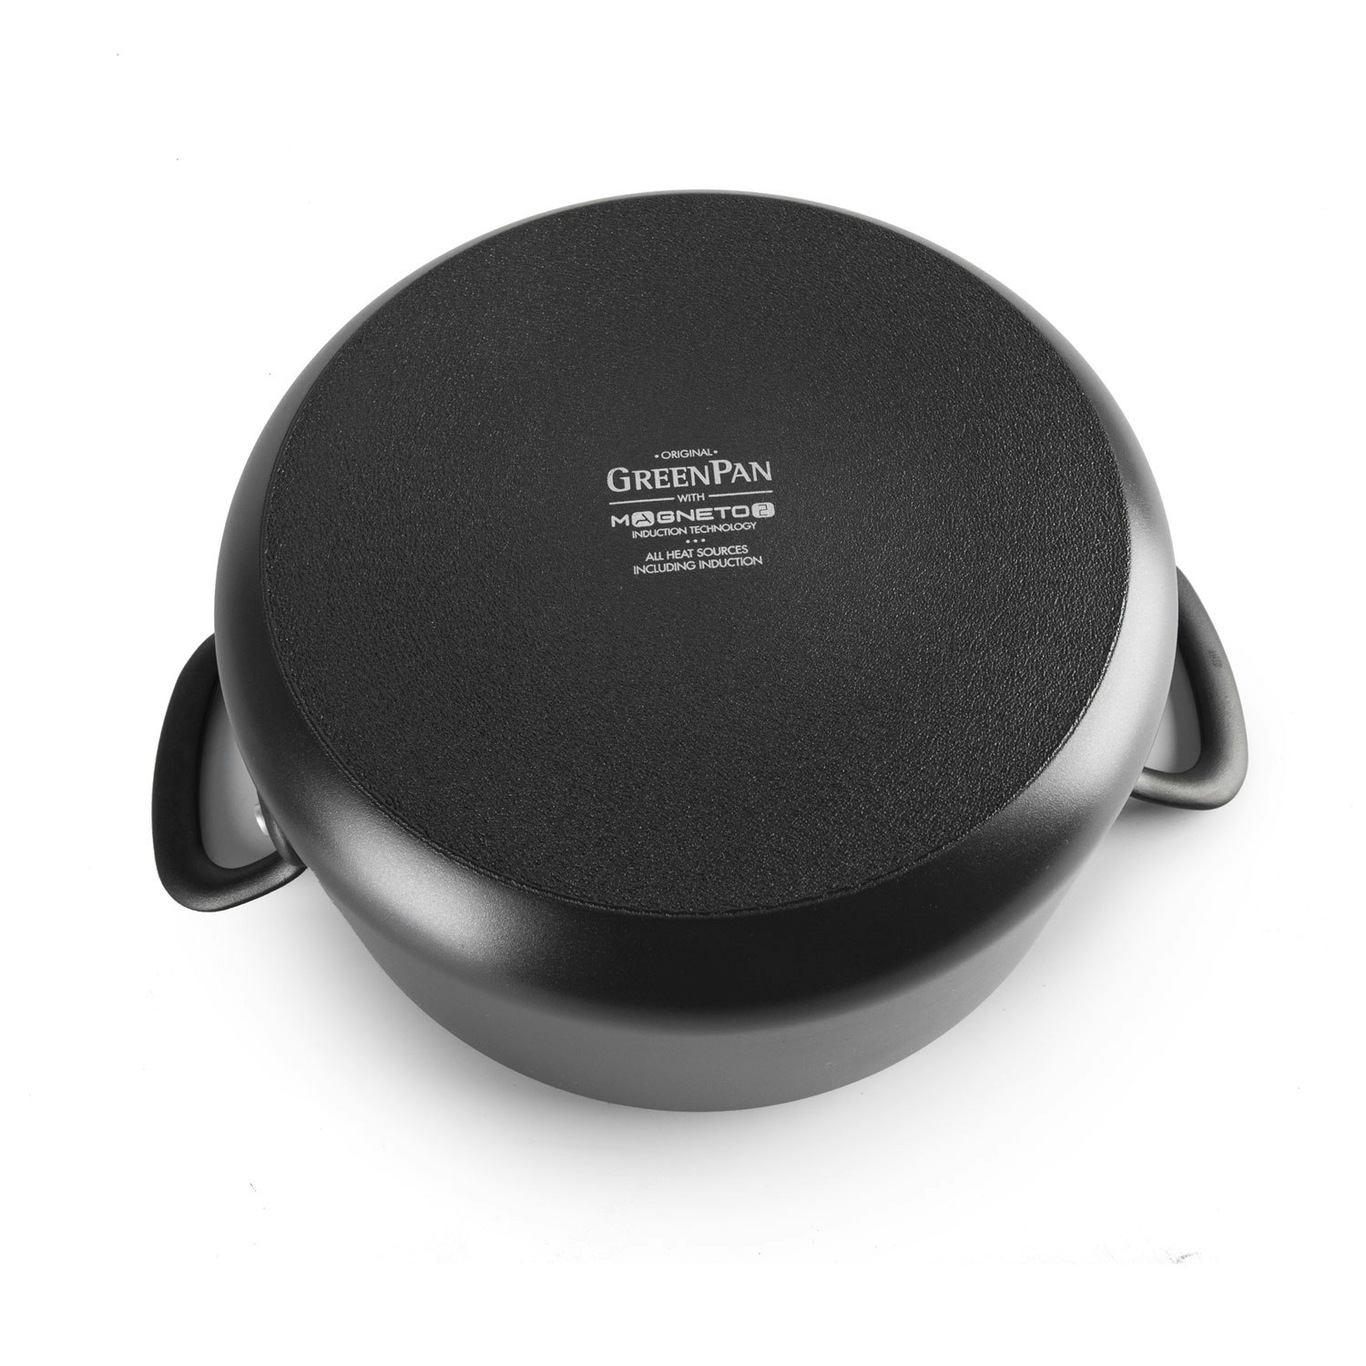 https://royaldesign.com/image/2/greenpan-craft-casserole-with-lid-24-cm-49-l-1?w=800&quality=80